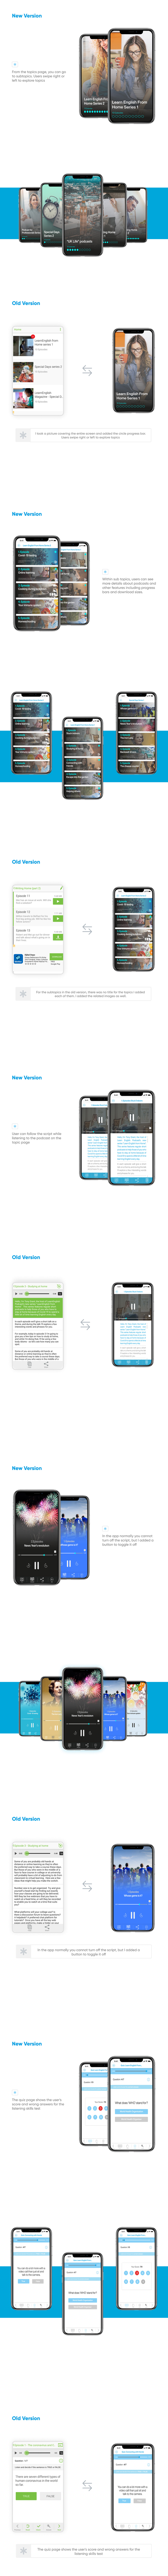 app BritishCouncil englishapp LearningApp UI uiux ux prototype user experience UX design